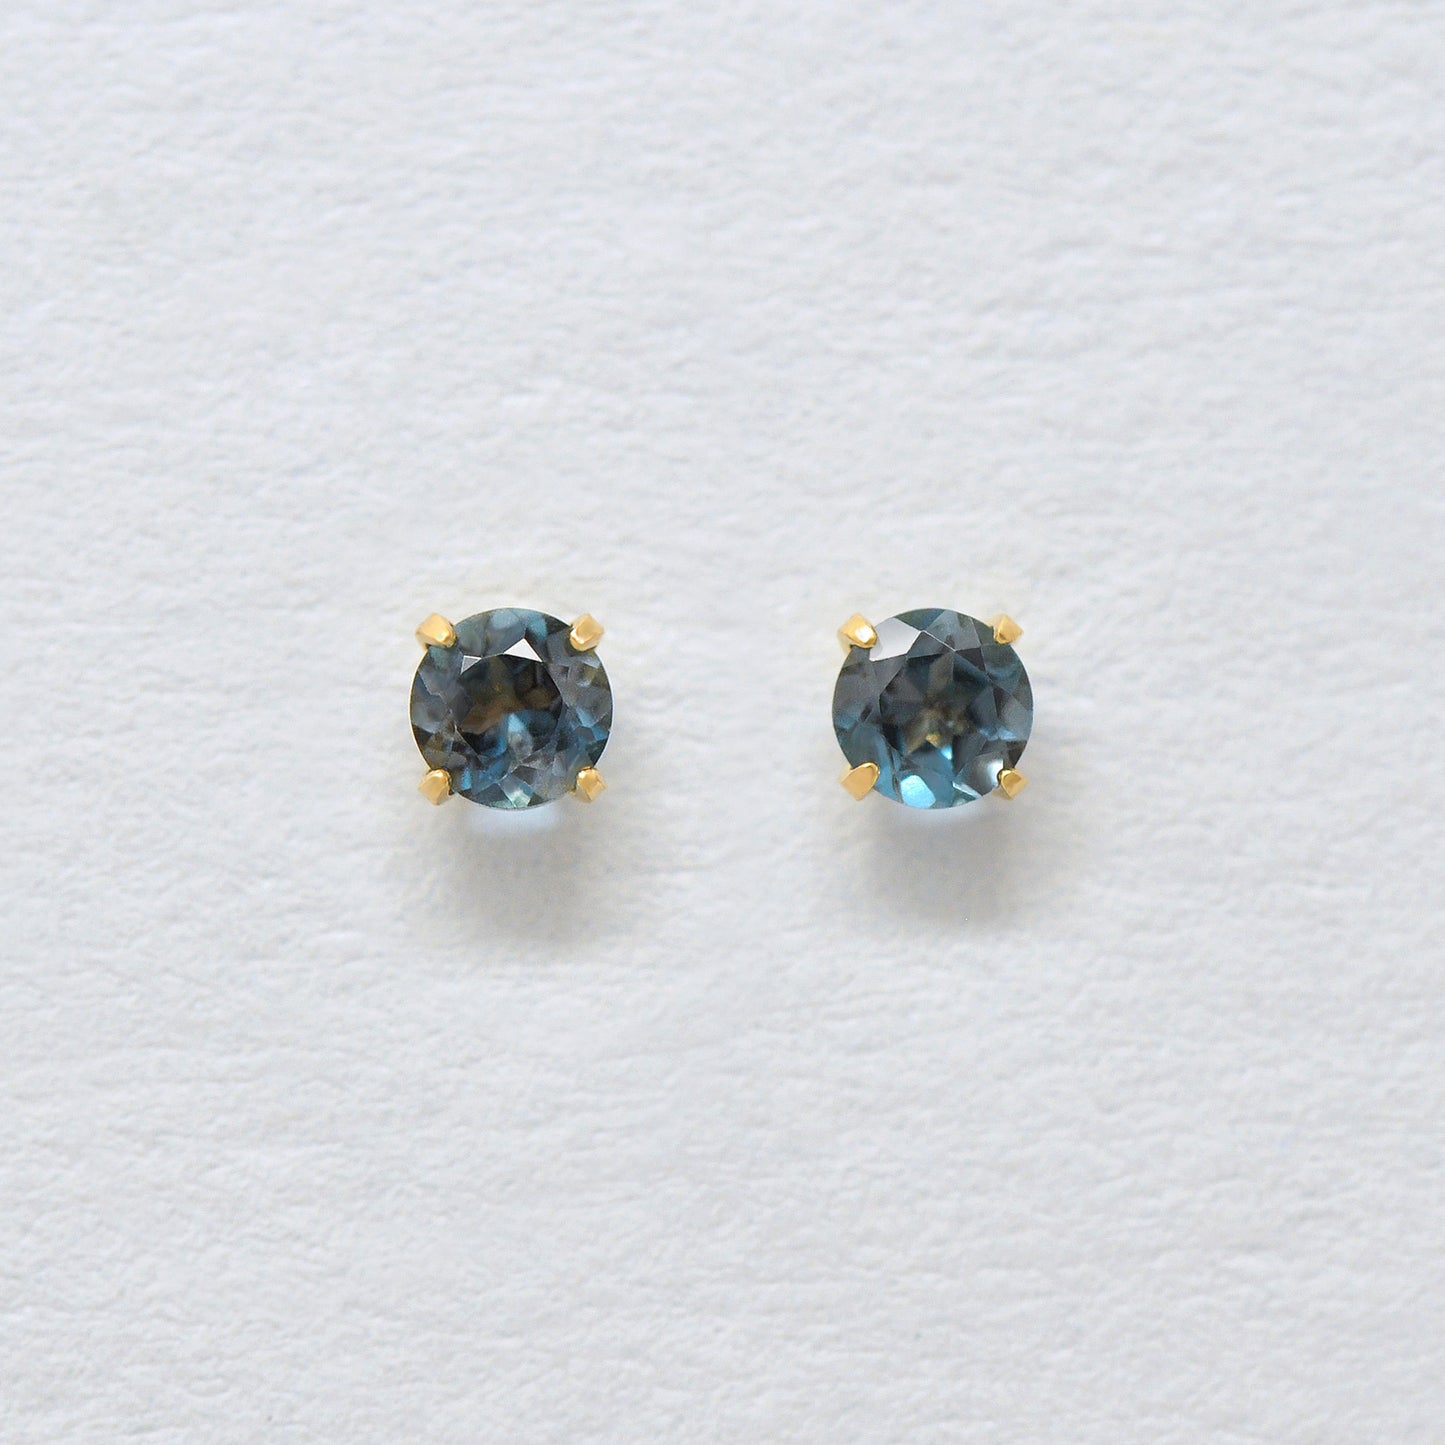 [Second Earrings] 18K Yellow Gold London Blue Topaz Earrings - Product Image